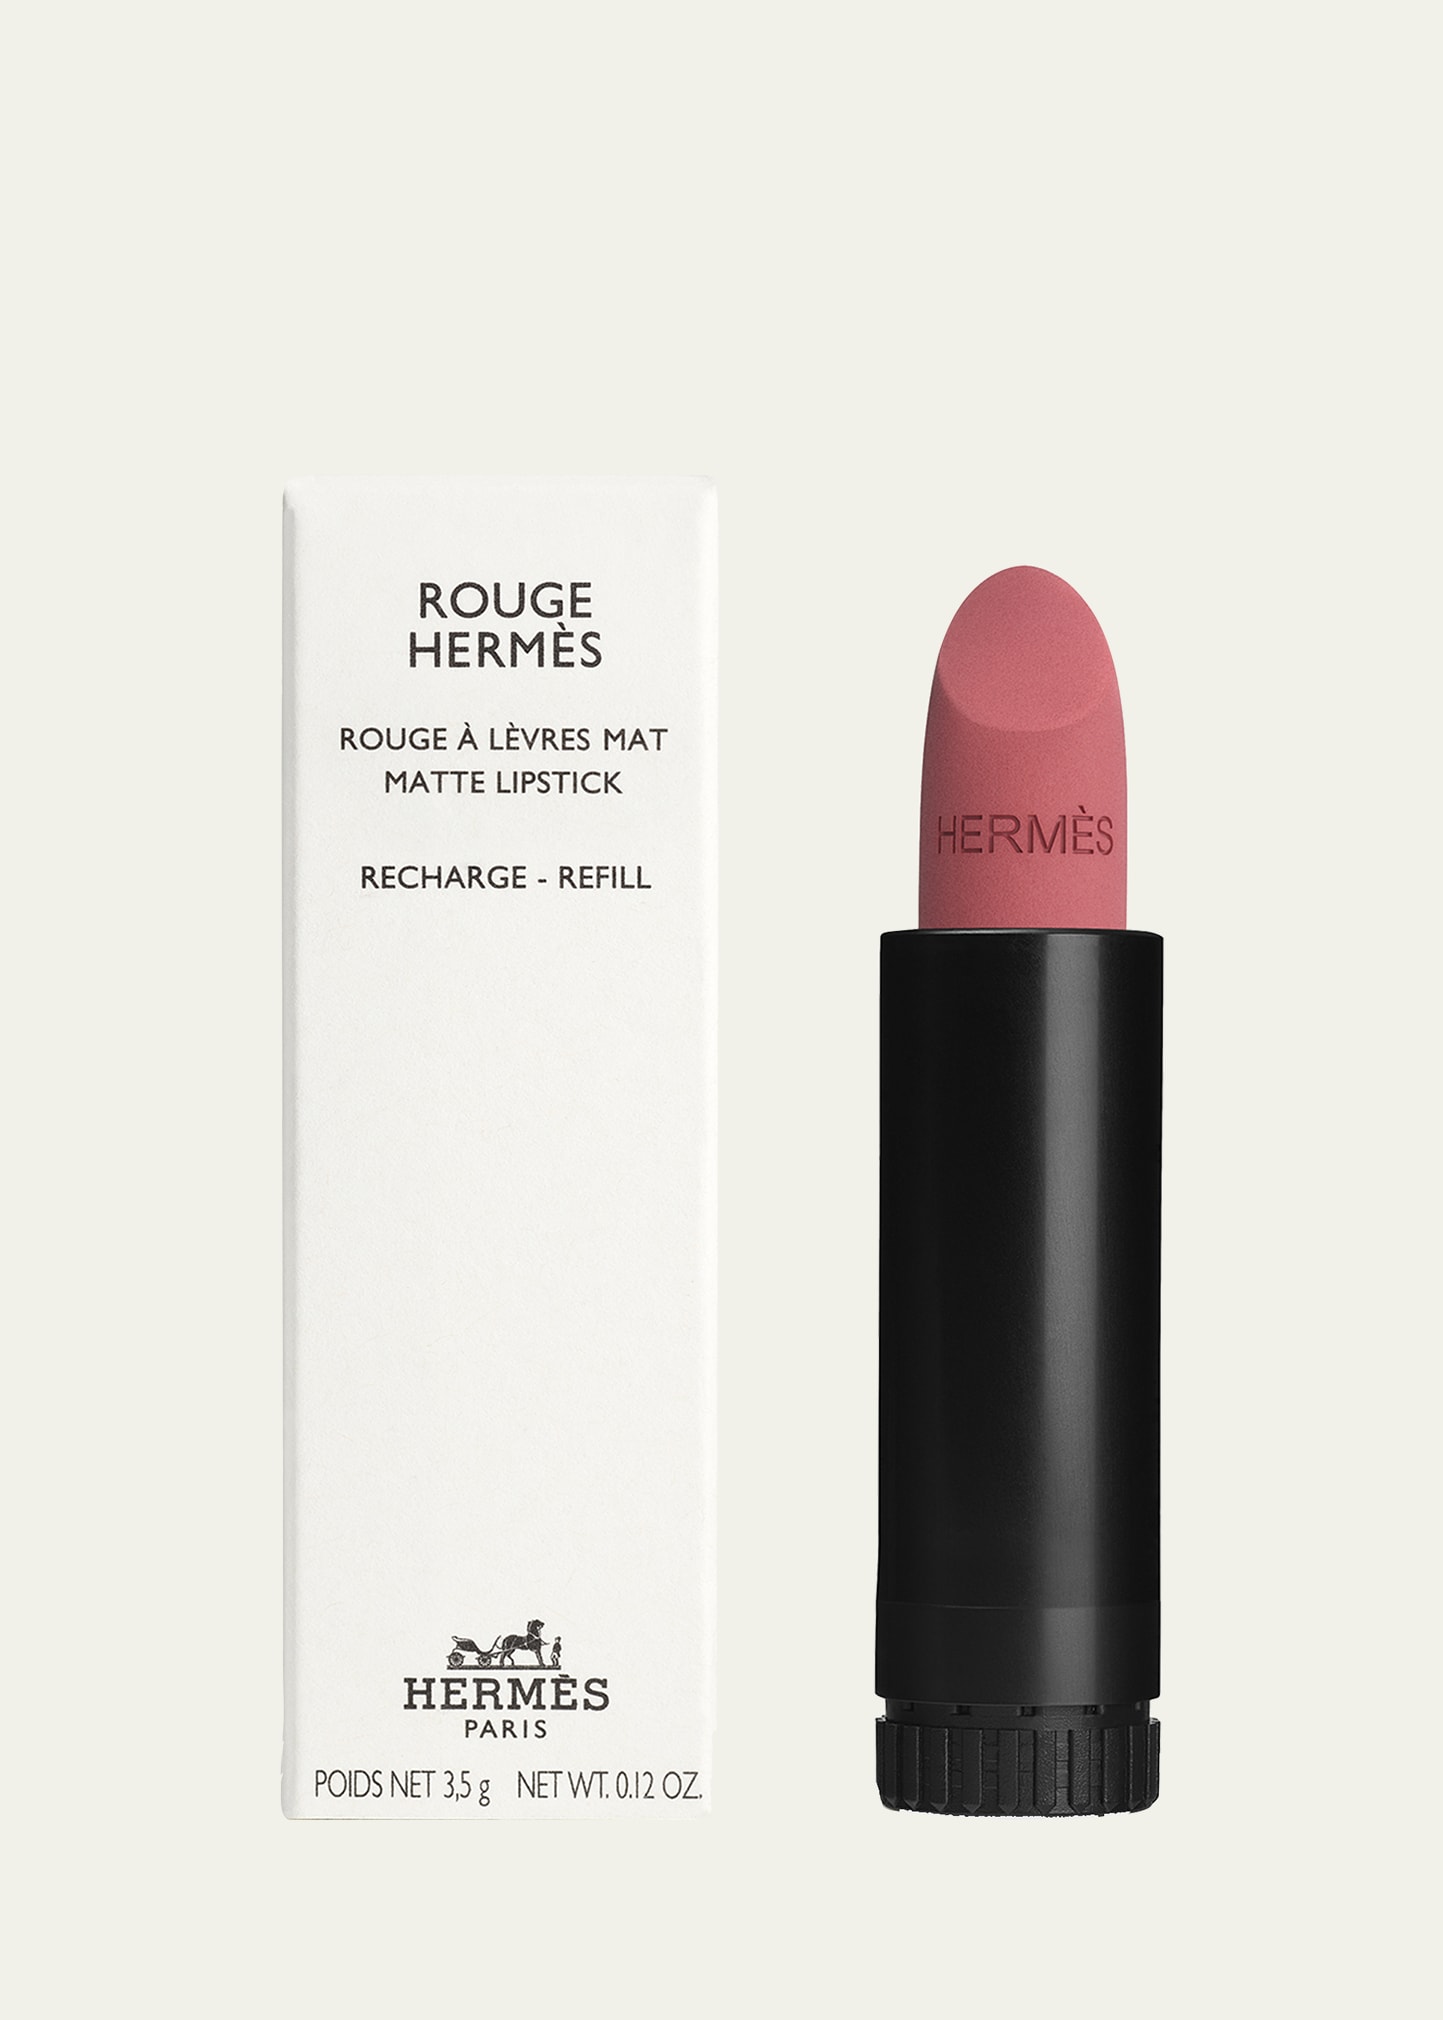 Hermès Rouge Hermes Matte Lipstick Refill - Bergdorf Goodman